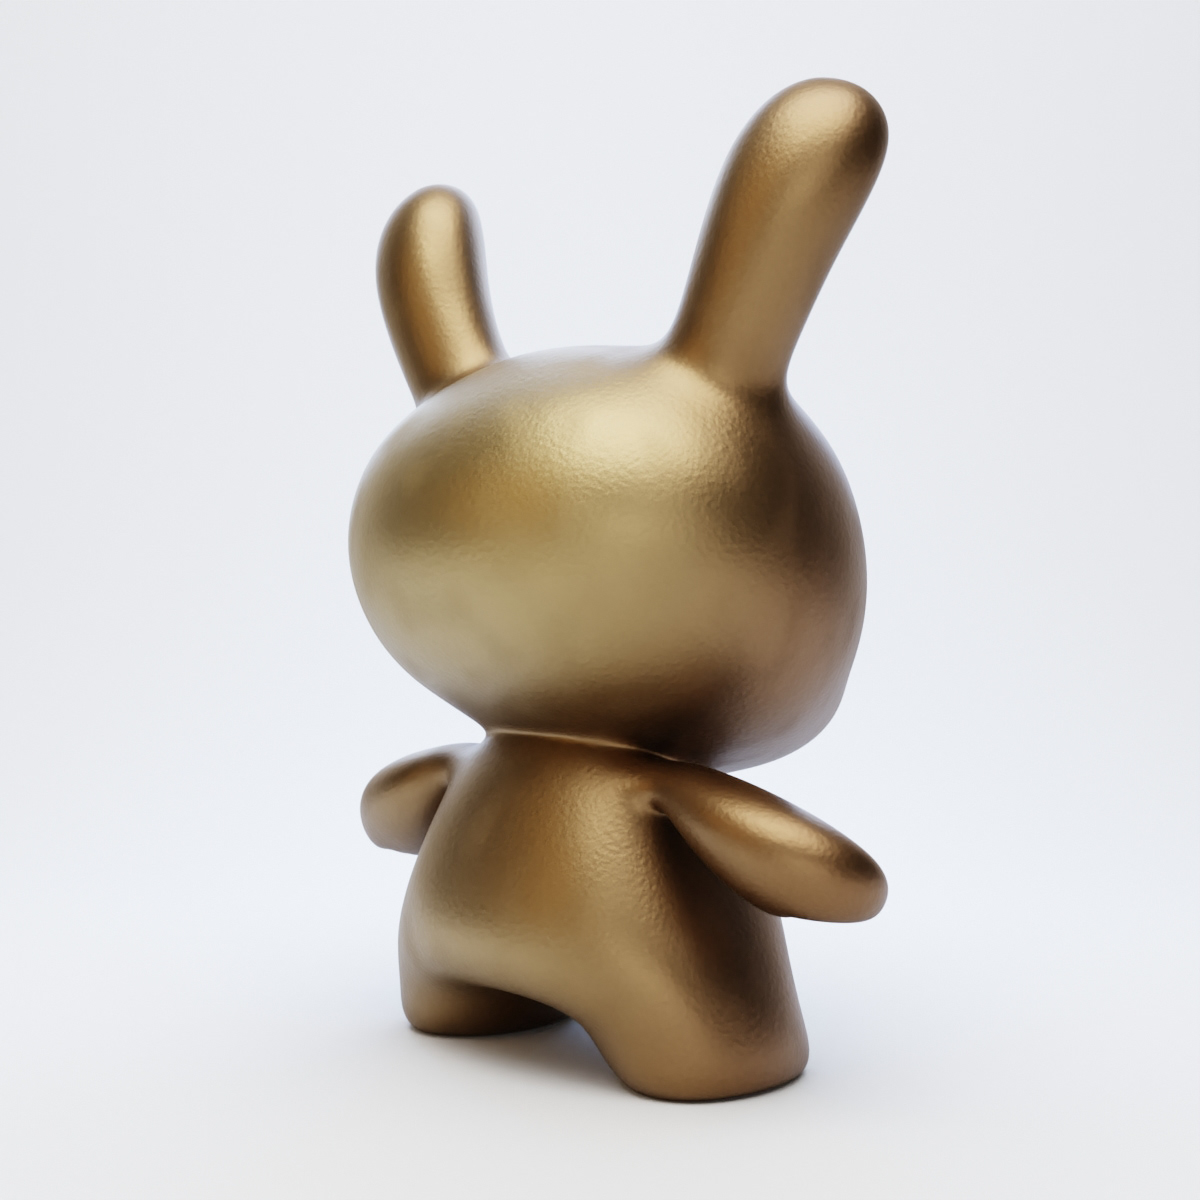 3D art blender Dunny fıgure kıdrobot model Render sculpture toy